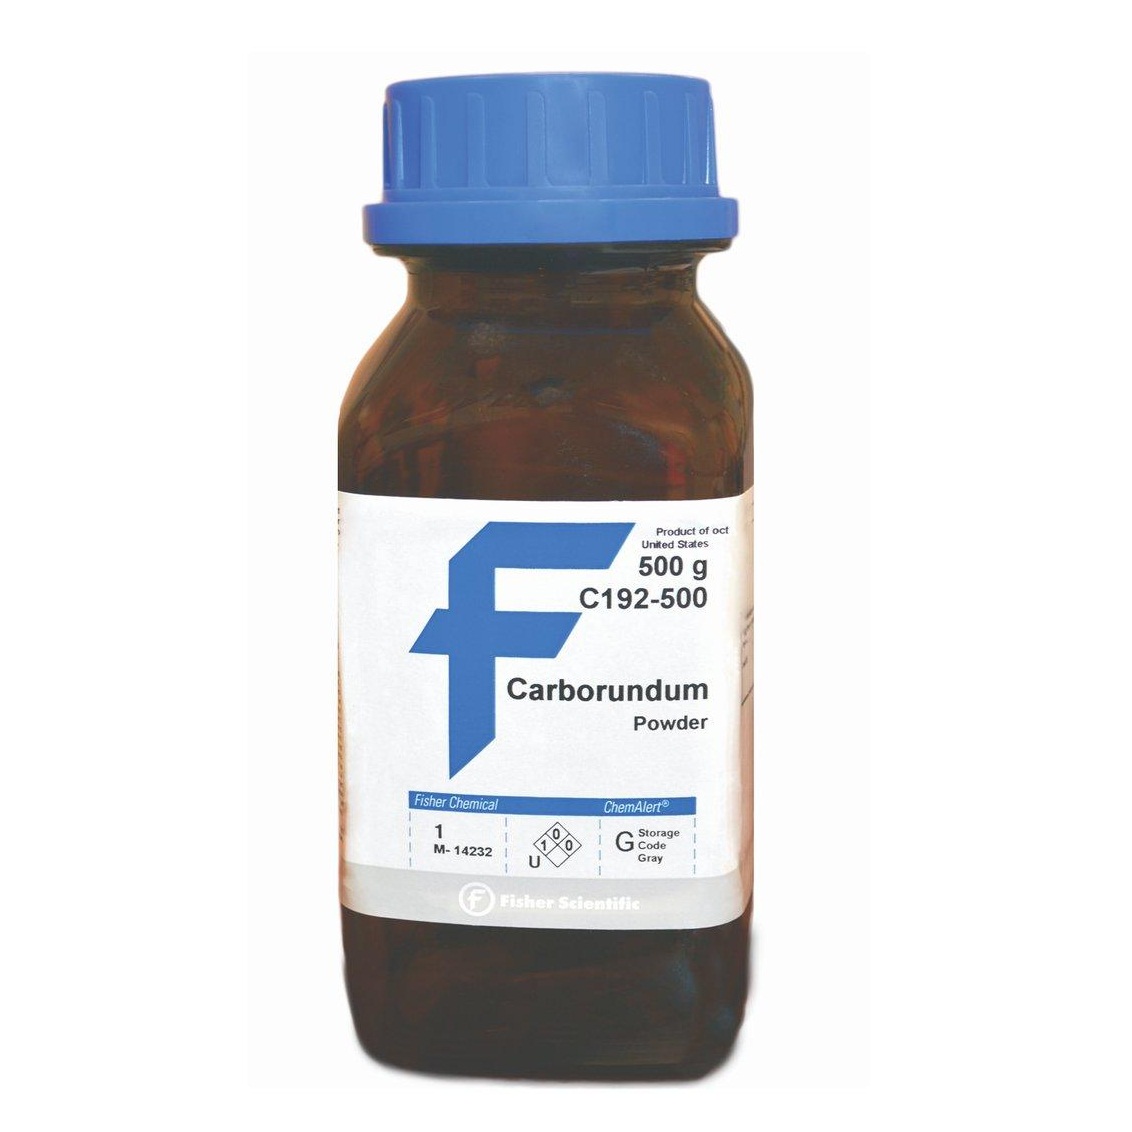 Carborundum (Powder), Fisher Chemical